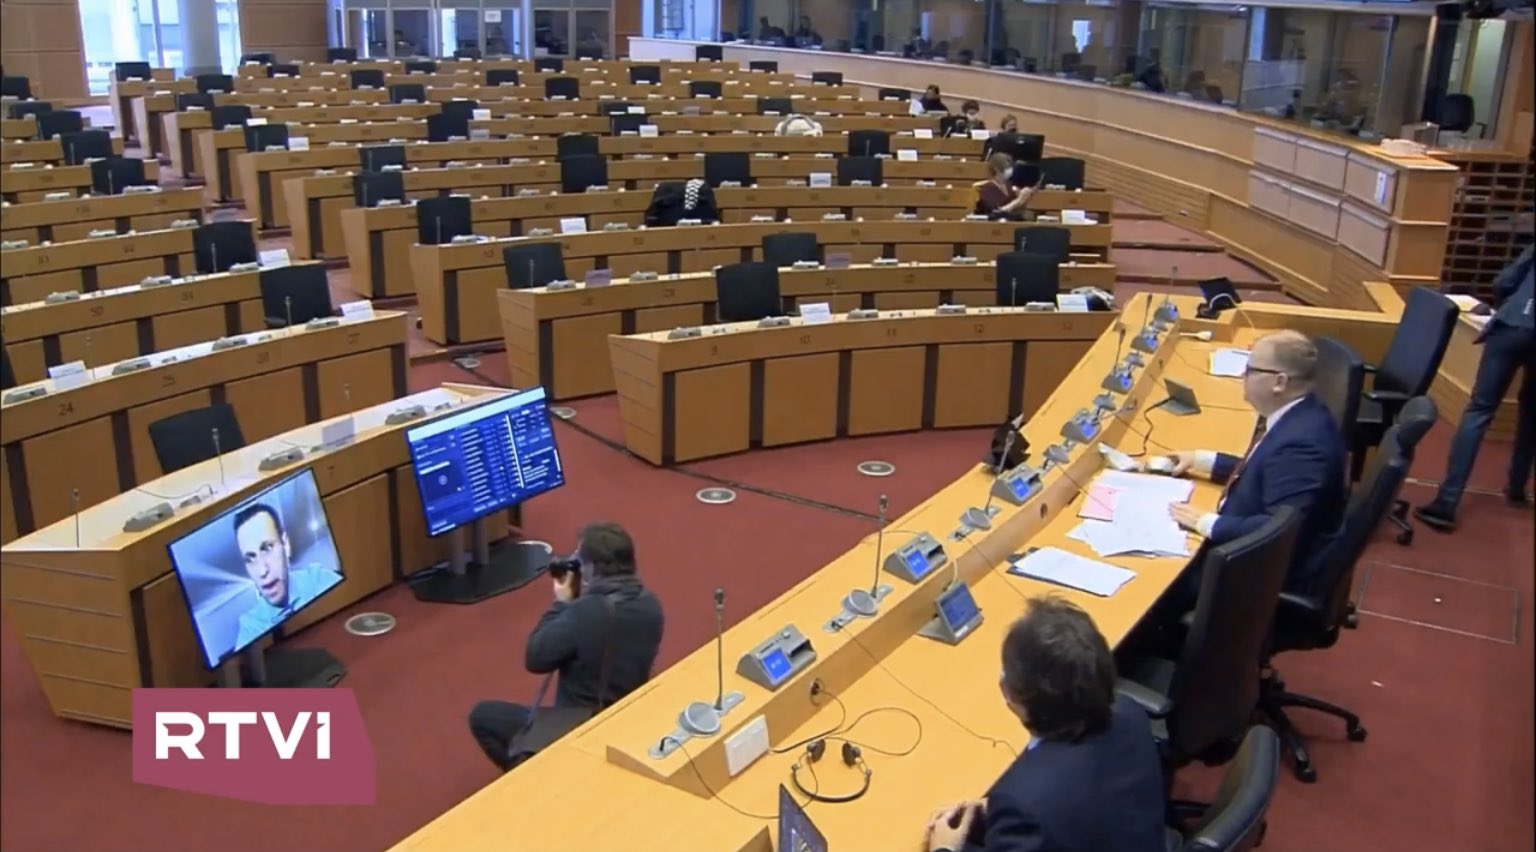 В пустом зале Европарламента дохли на лету поздние мухи...(с)